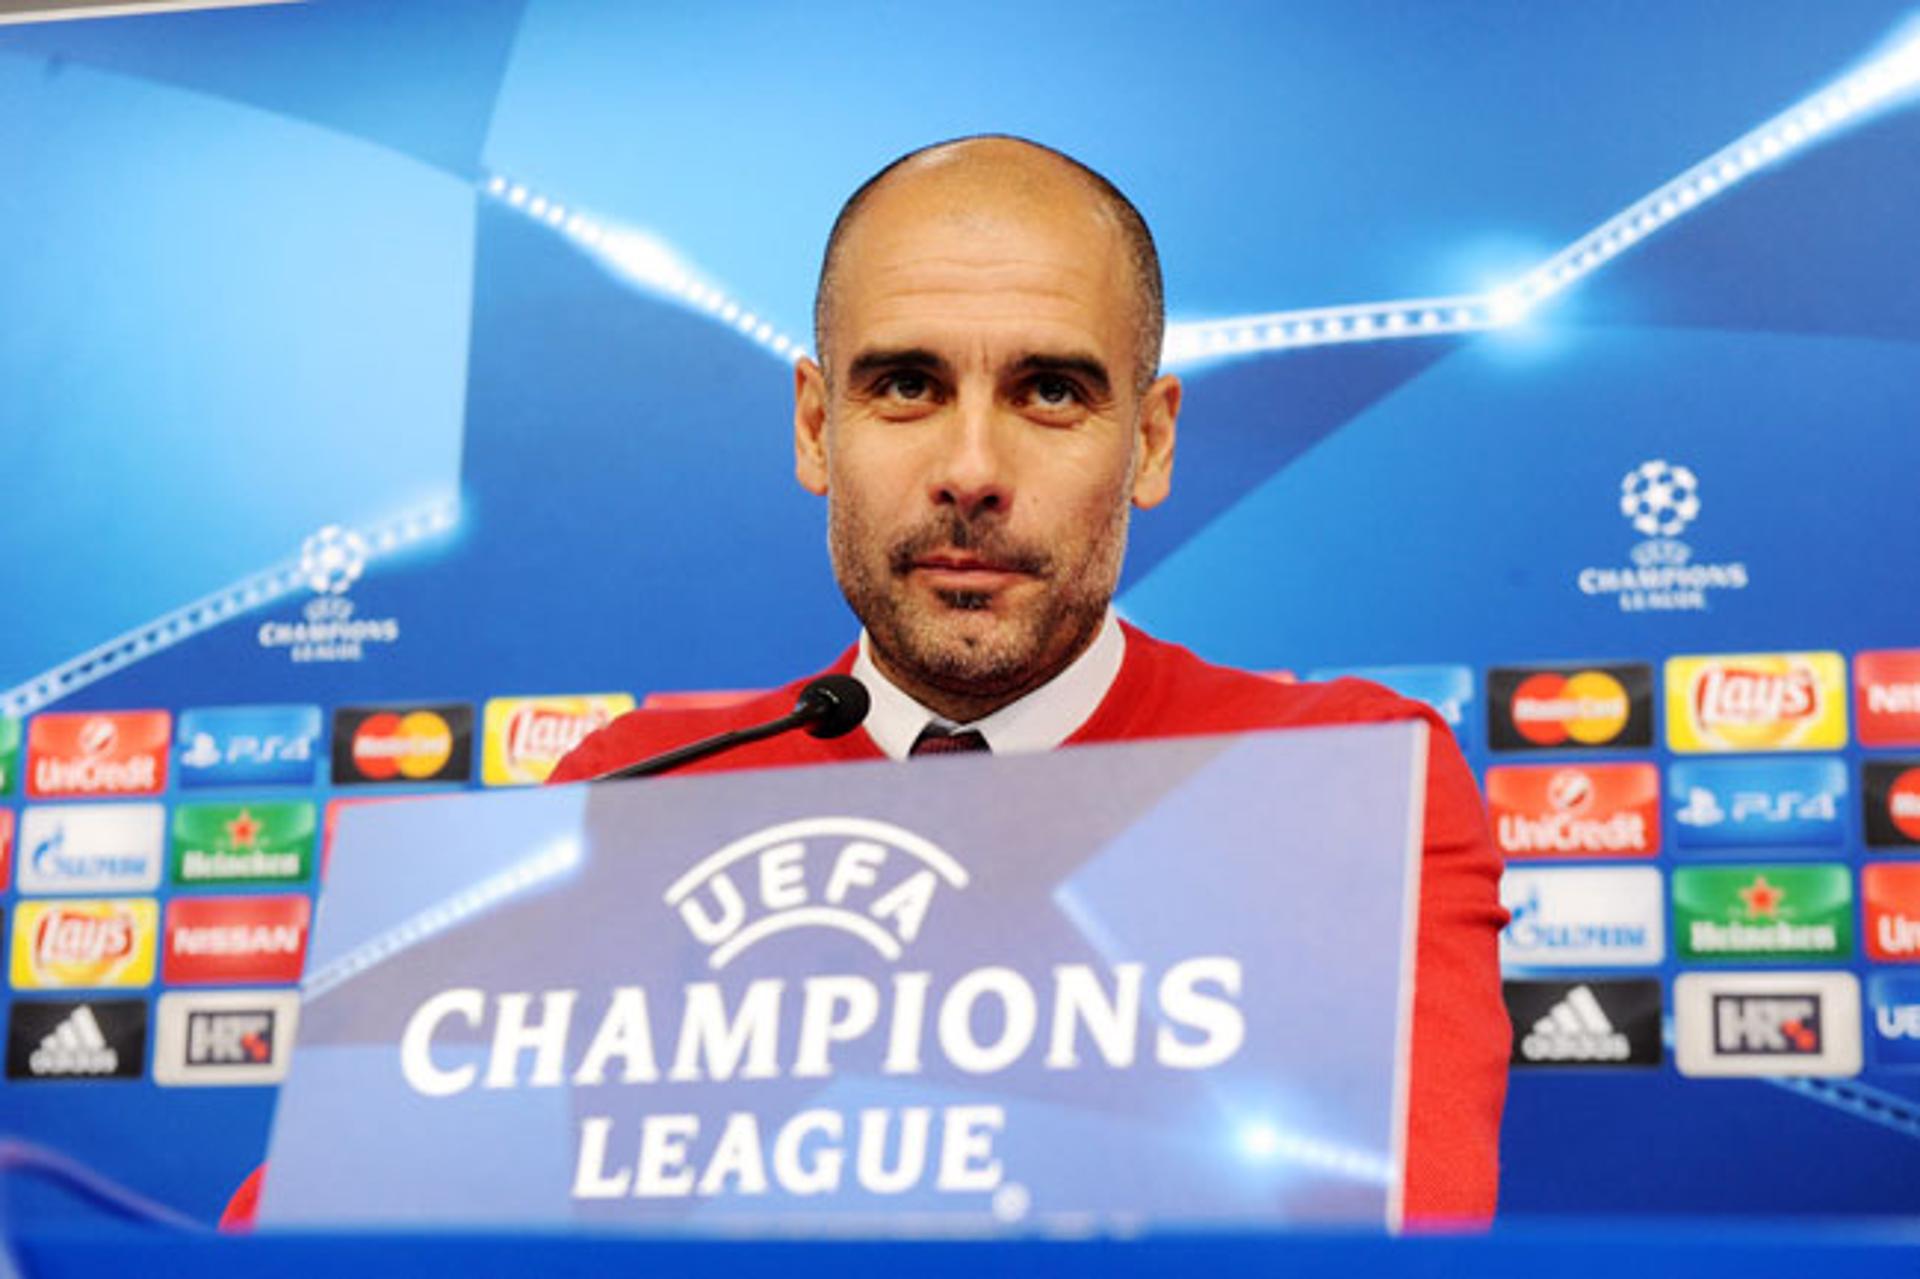 Guardiola venceu 100 jogos pelo Bayern de Munique (Foto: STR / AFP)